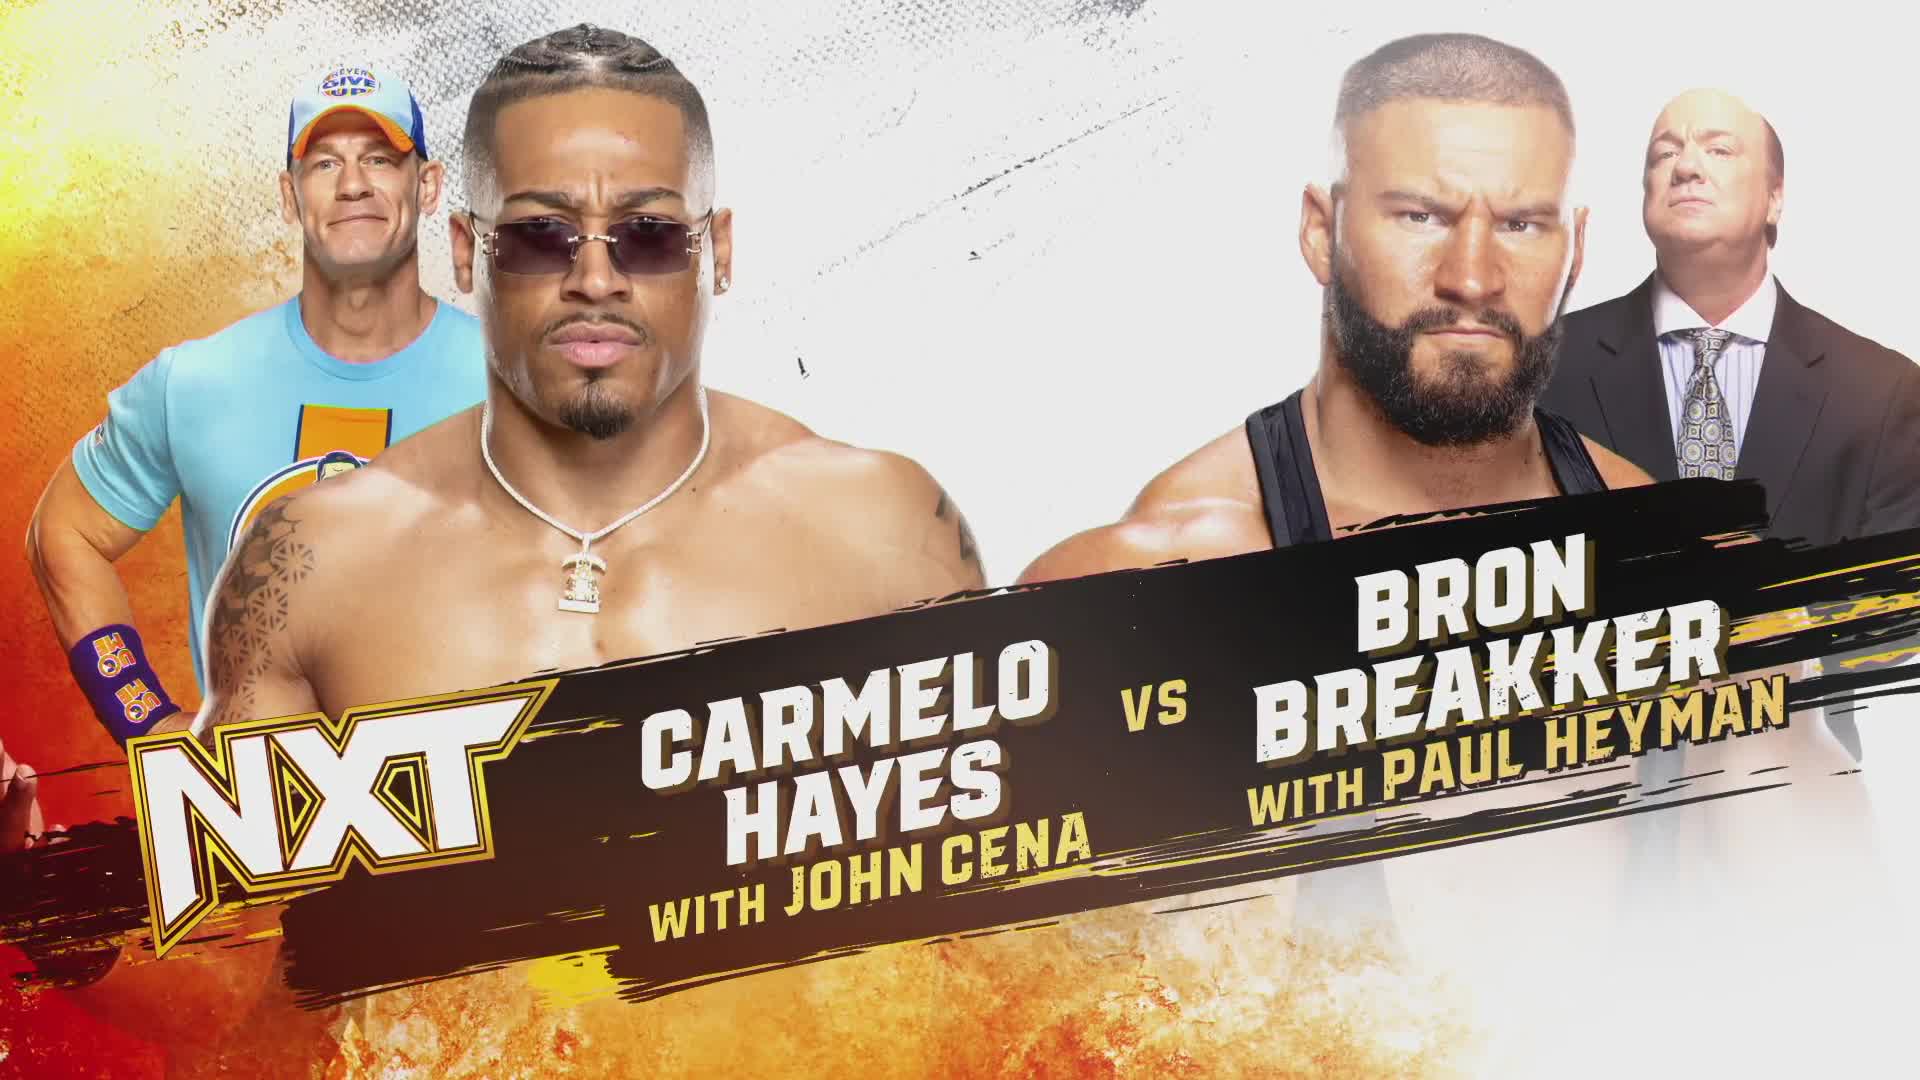 A WWE NXT match graphic featuring Carmelo Hayes, Bron Breakker, John Cena, and Paul Heyman.